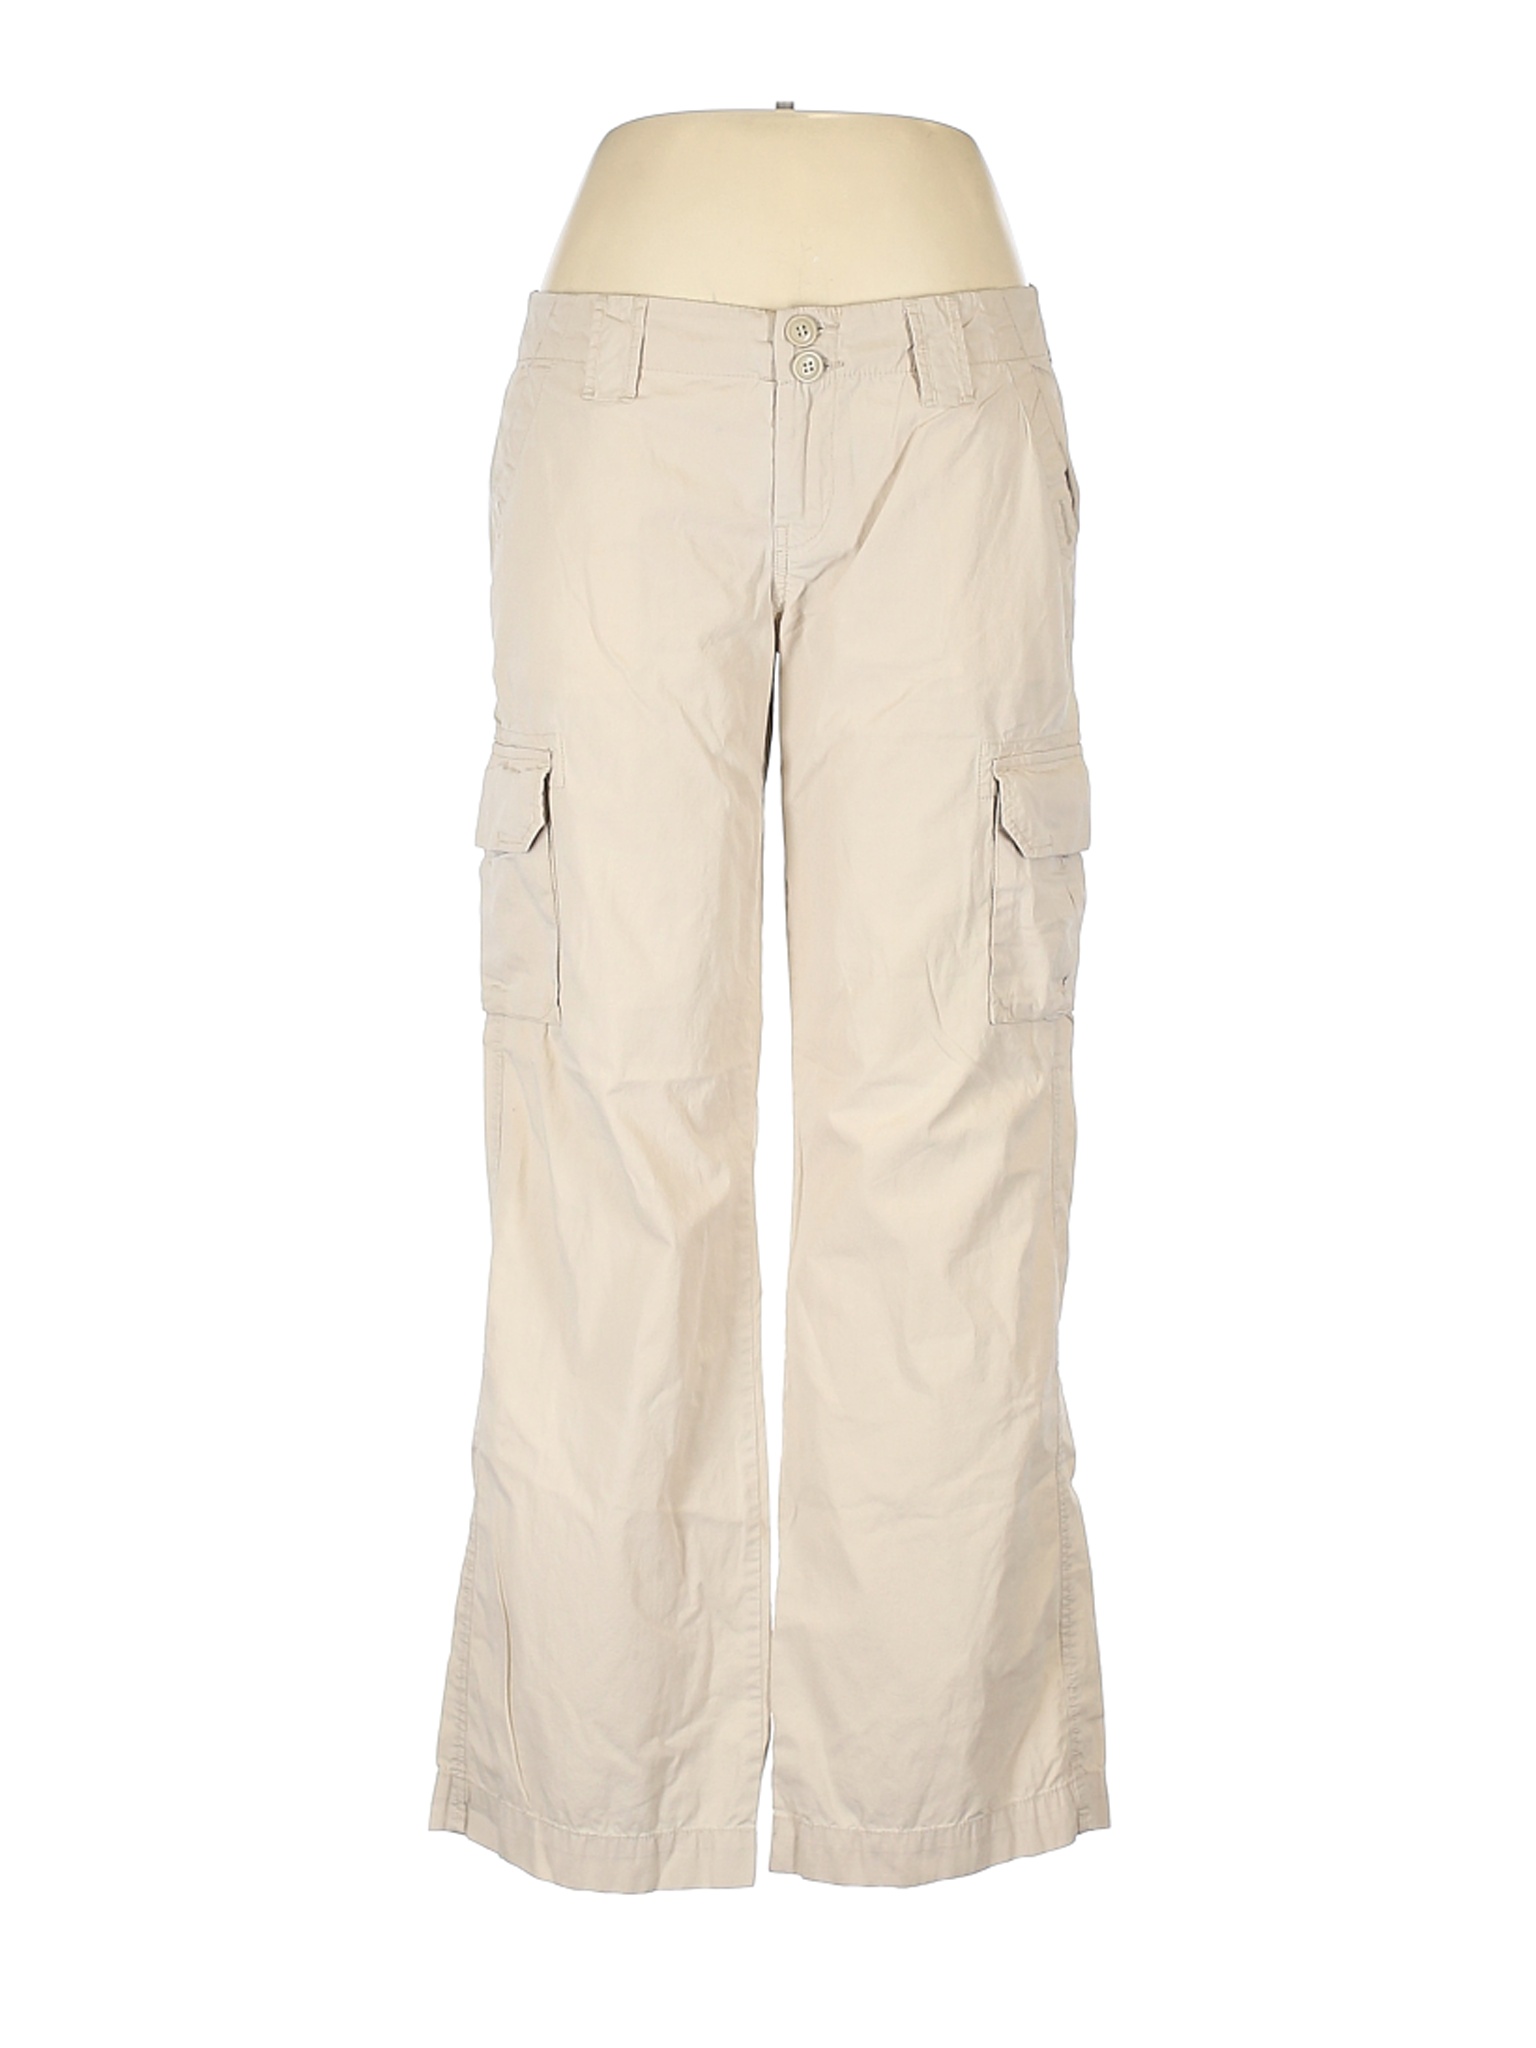 Lucky Brand Women Ivory Cargo Pants 14 | eBay